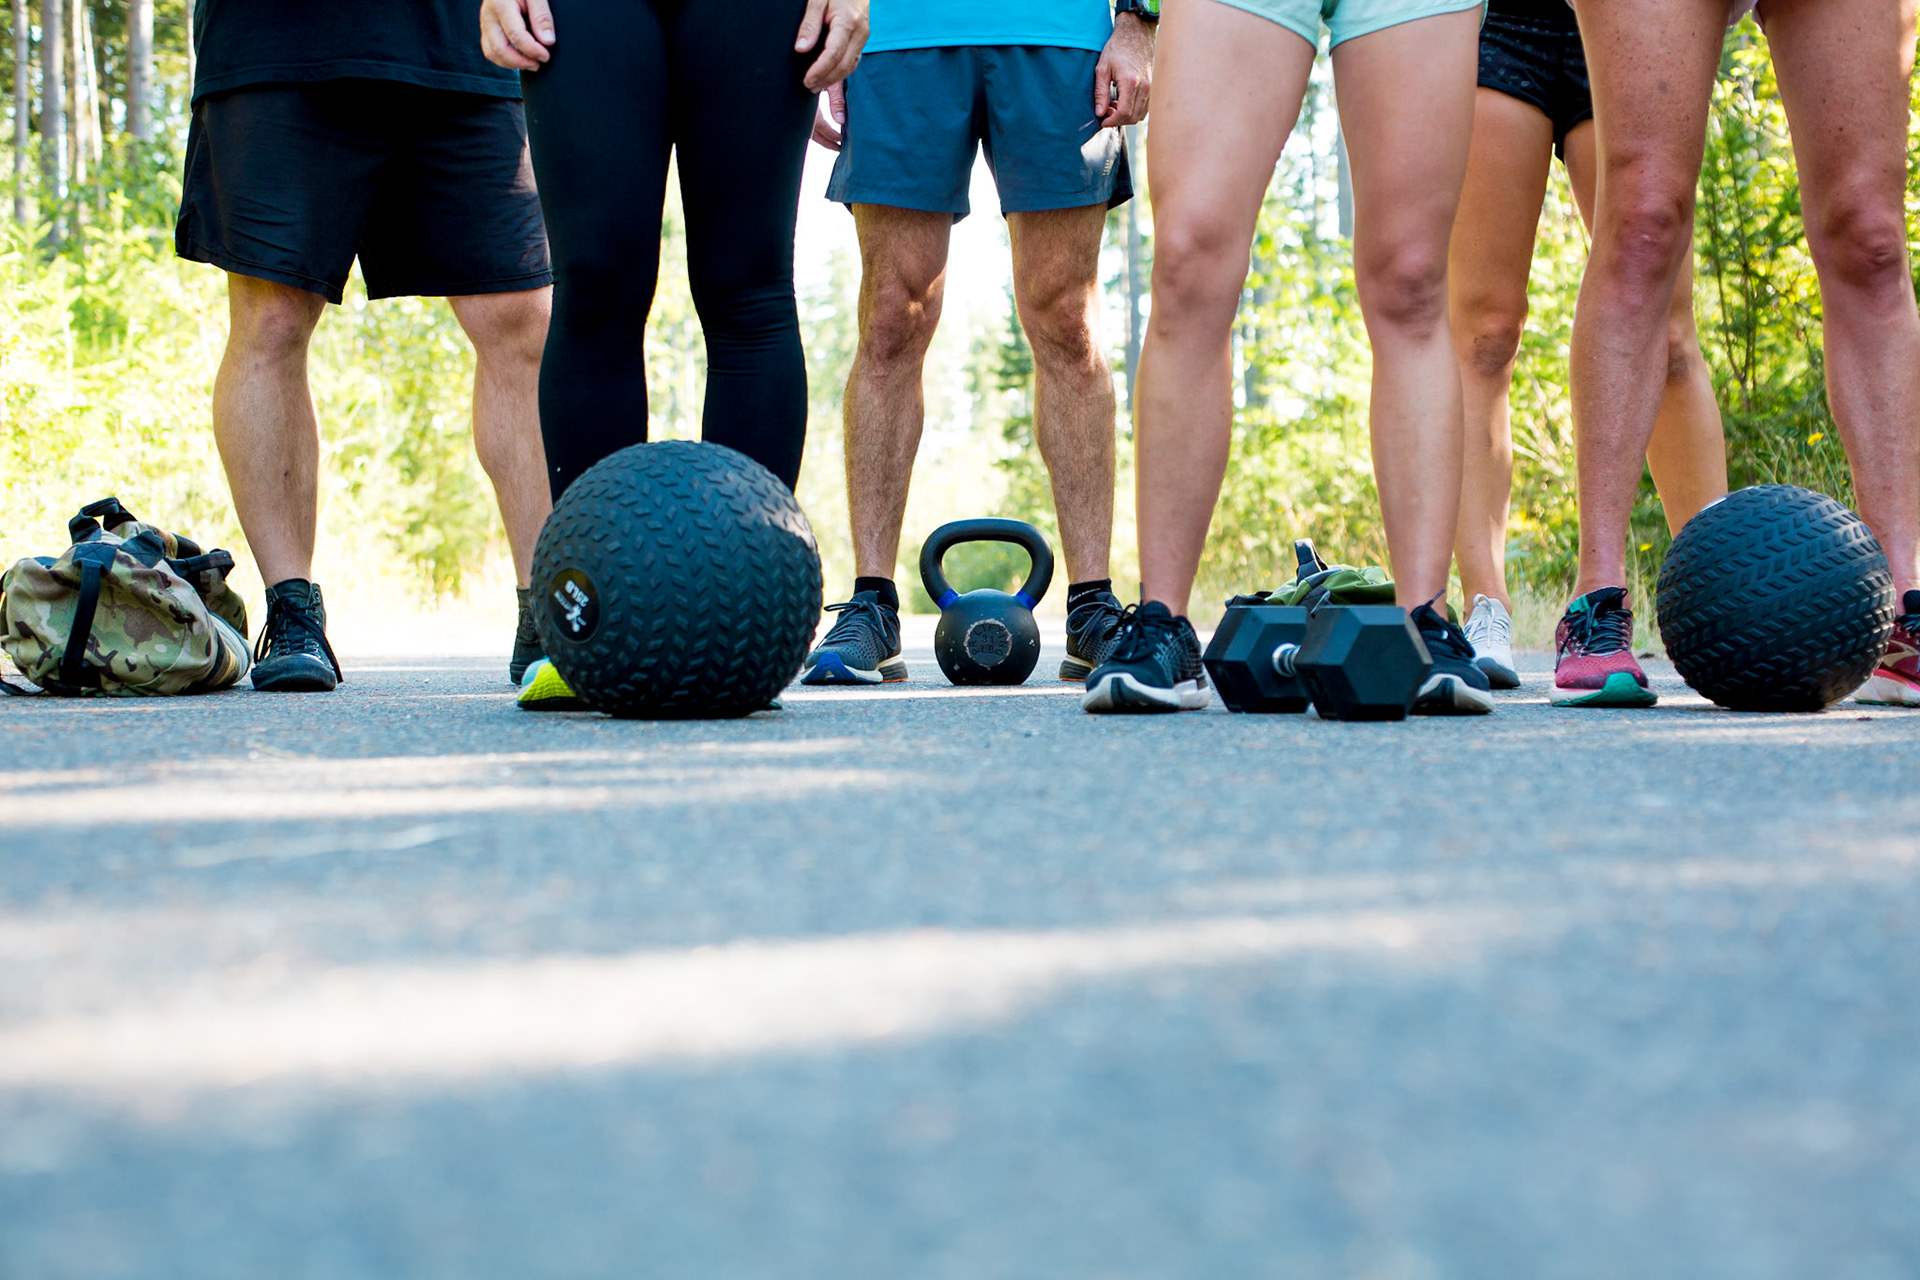 Outdoor fitness class with dumbbells, slam ball, kettlebell